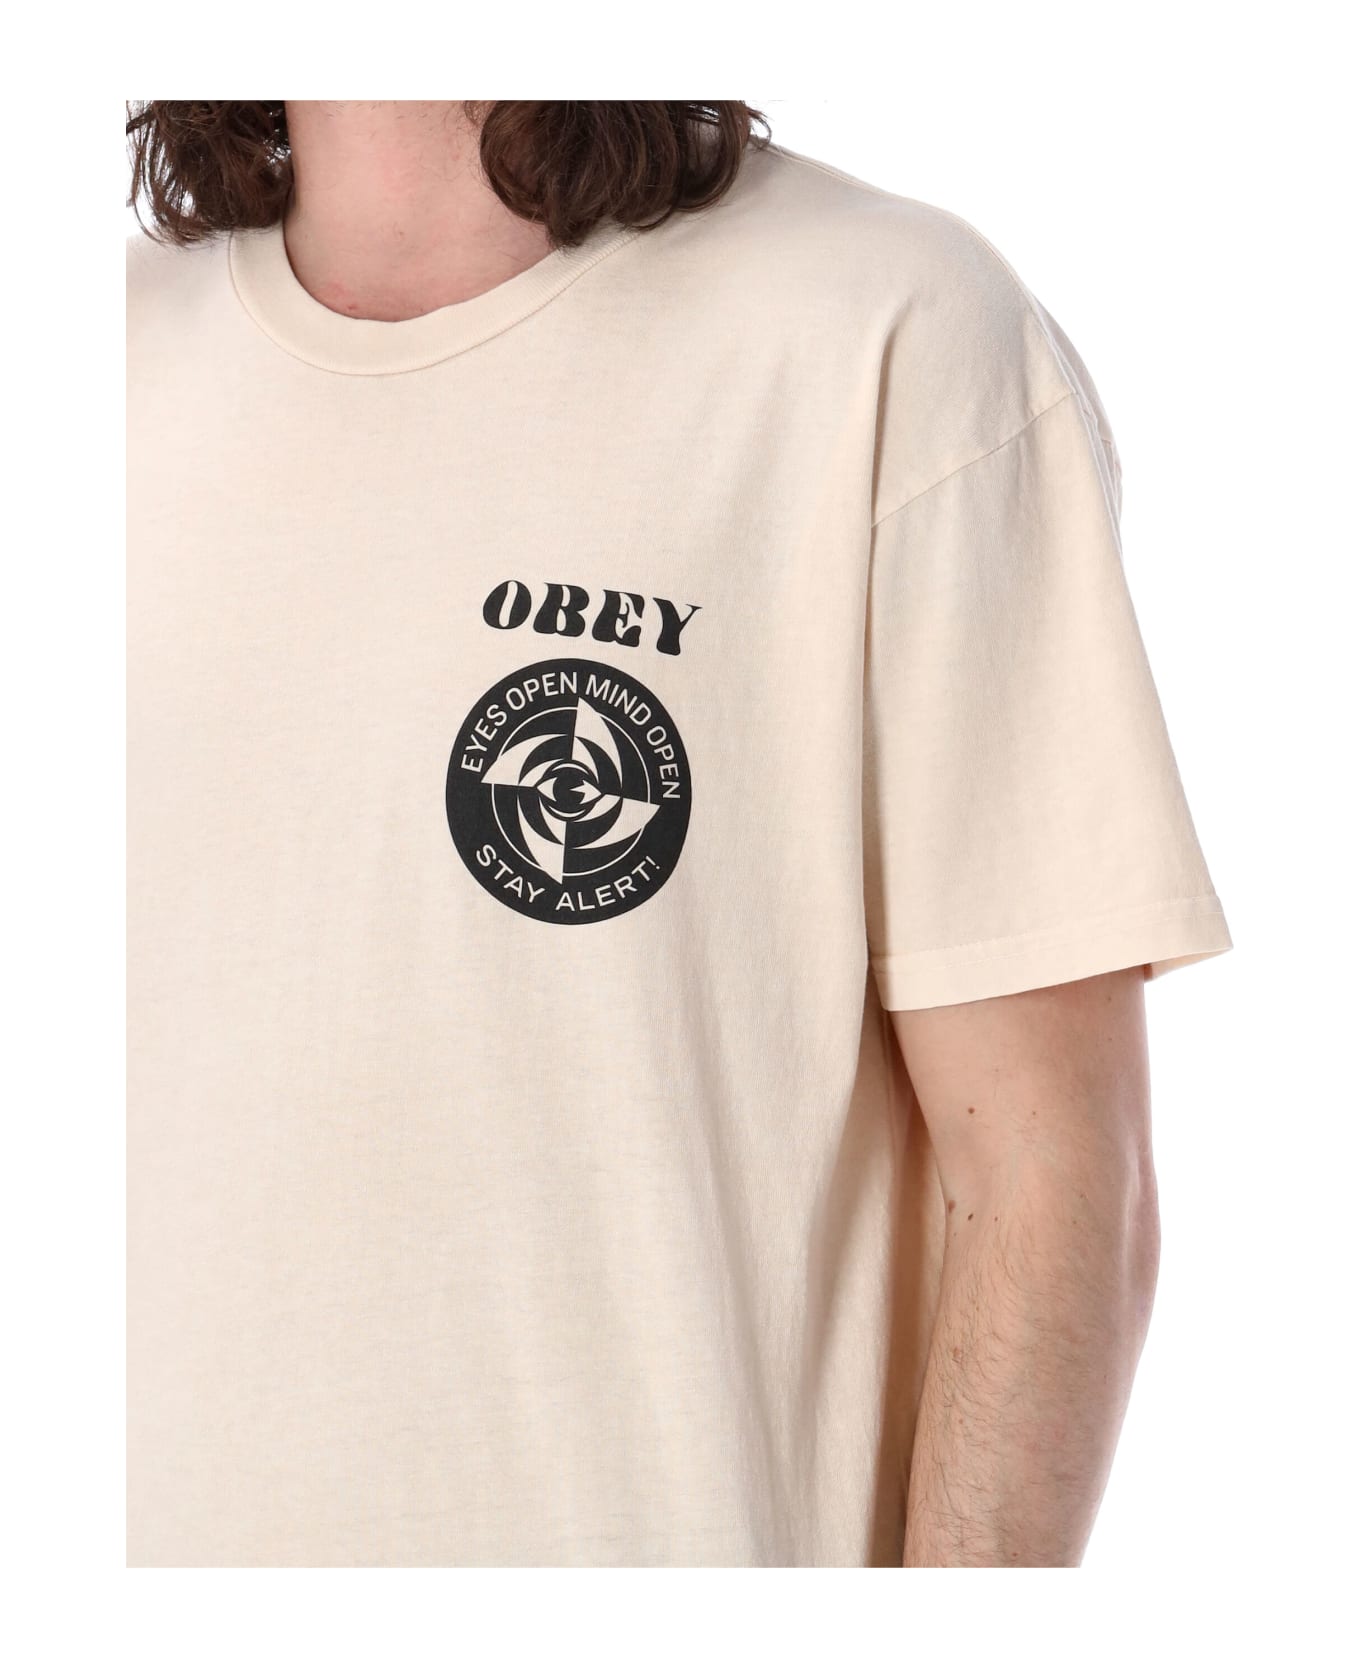 Obey Saty Alert Pigment T-shirt - PIGMENT SAGO